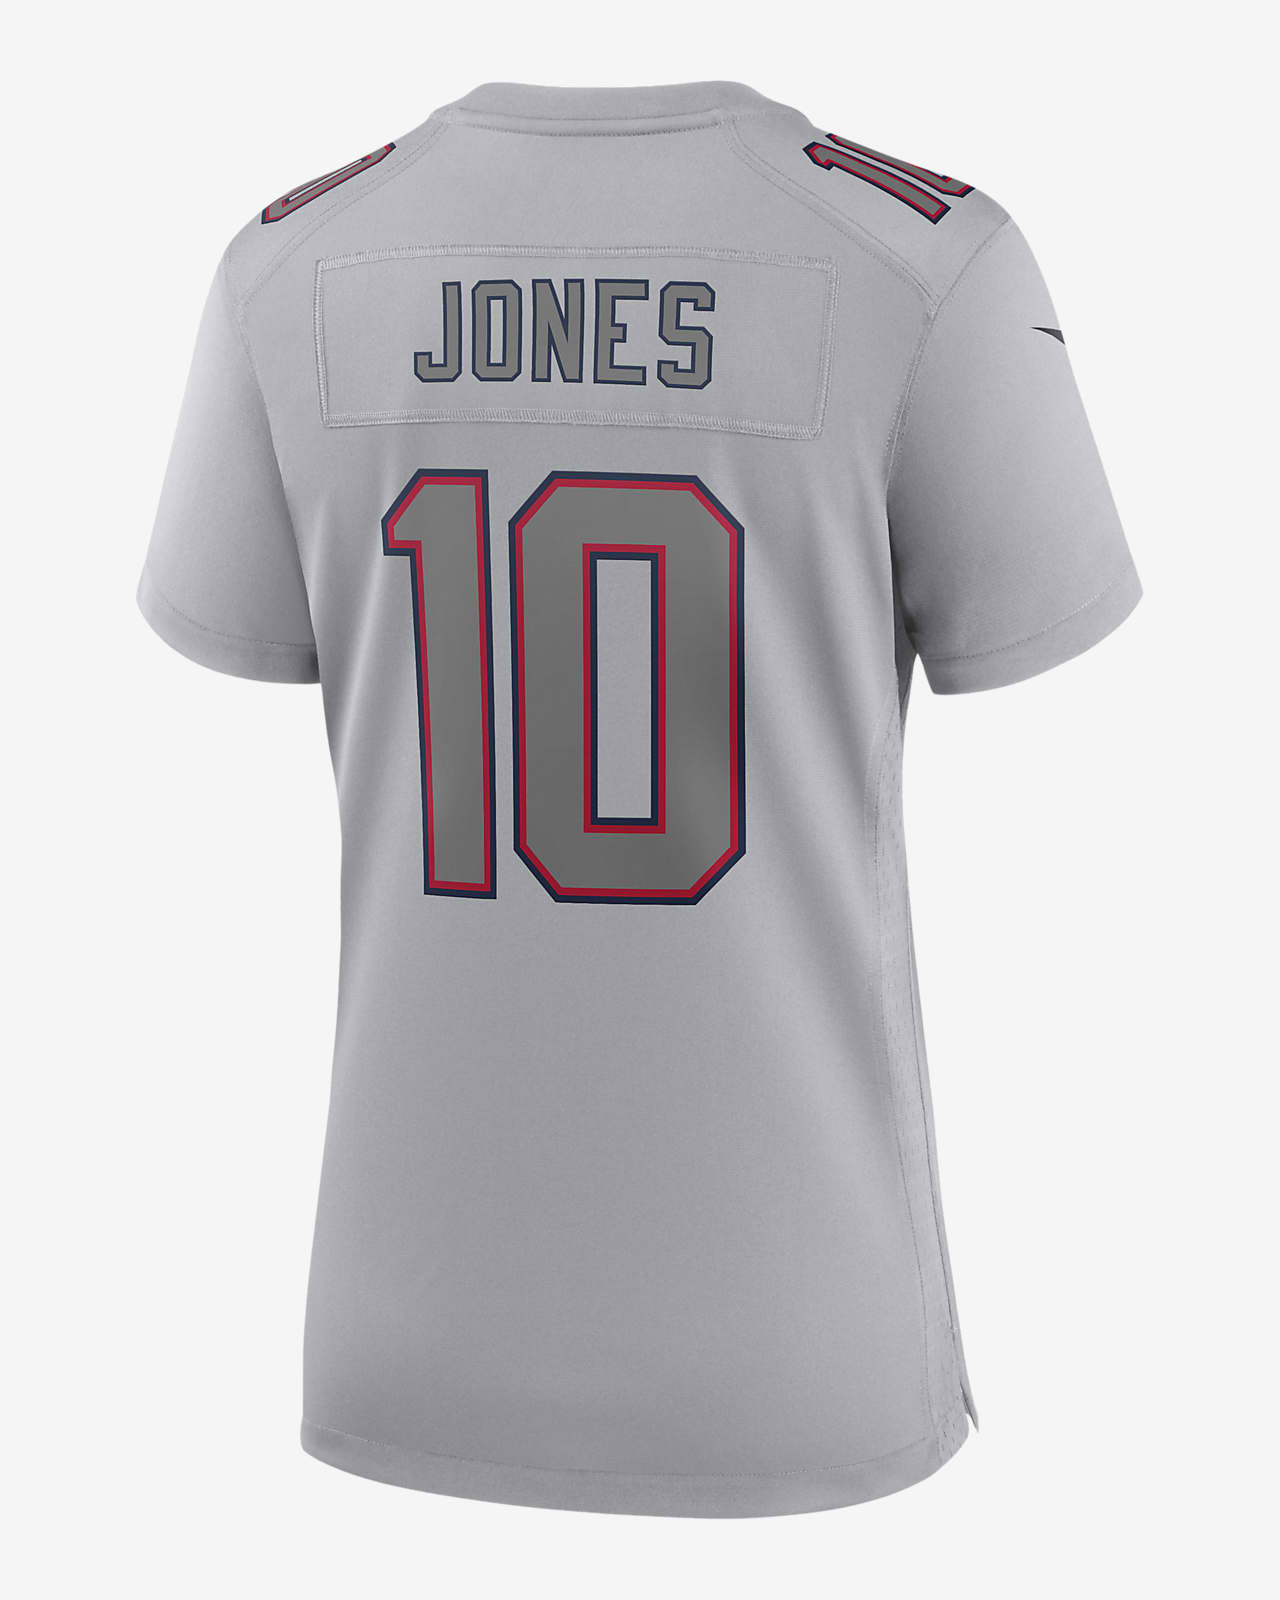 mac jones football jersey